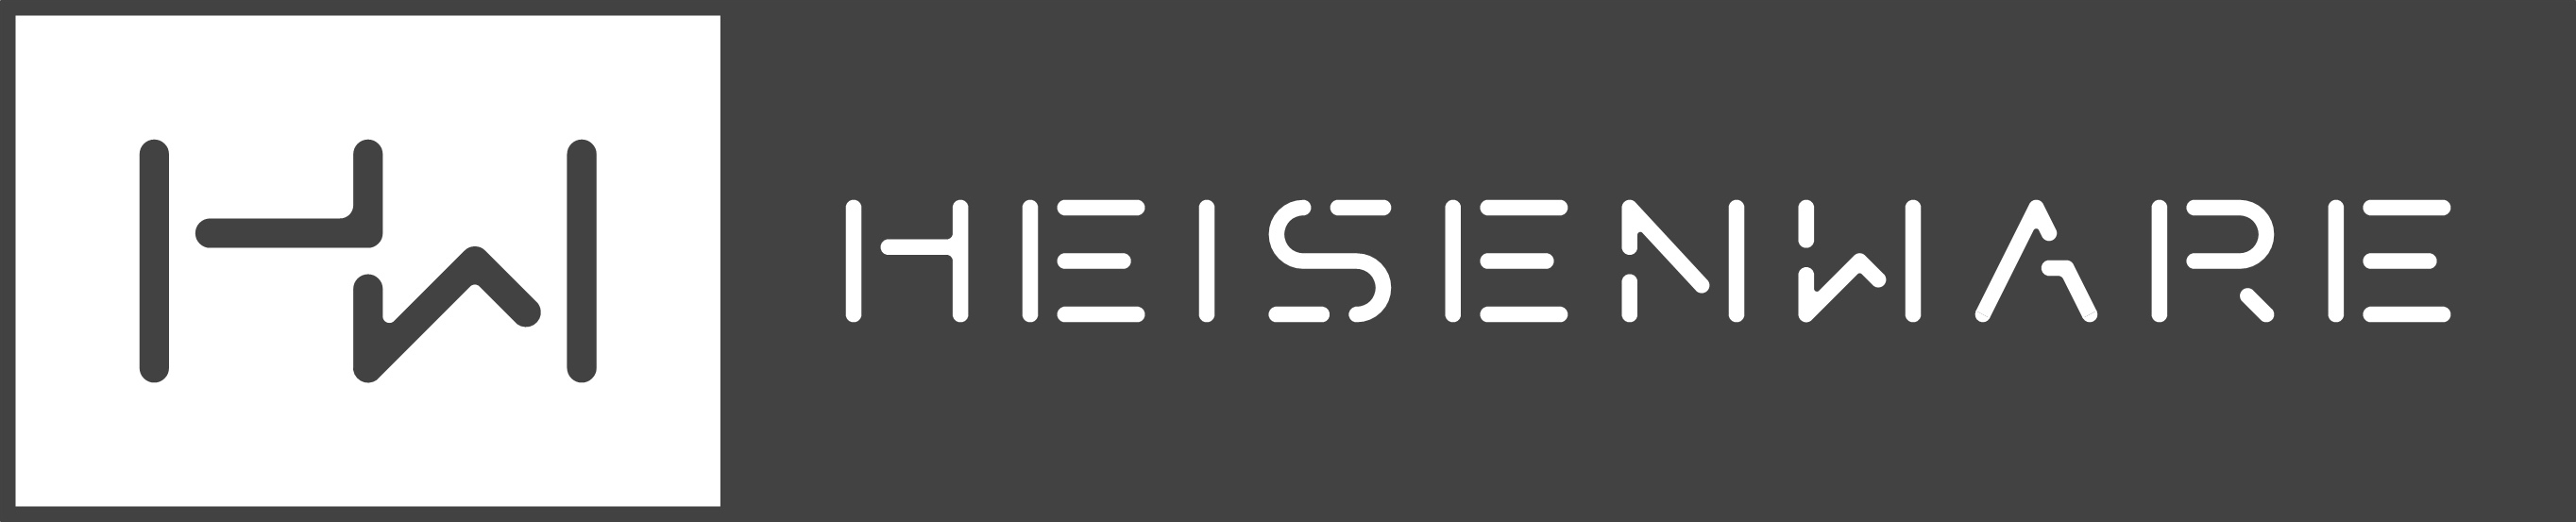 heisenware_logo